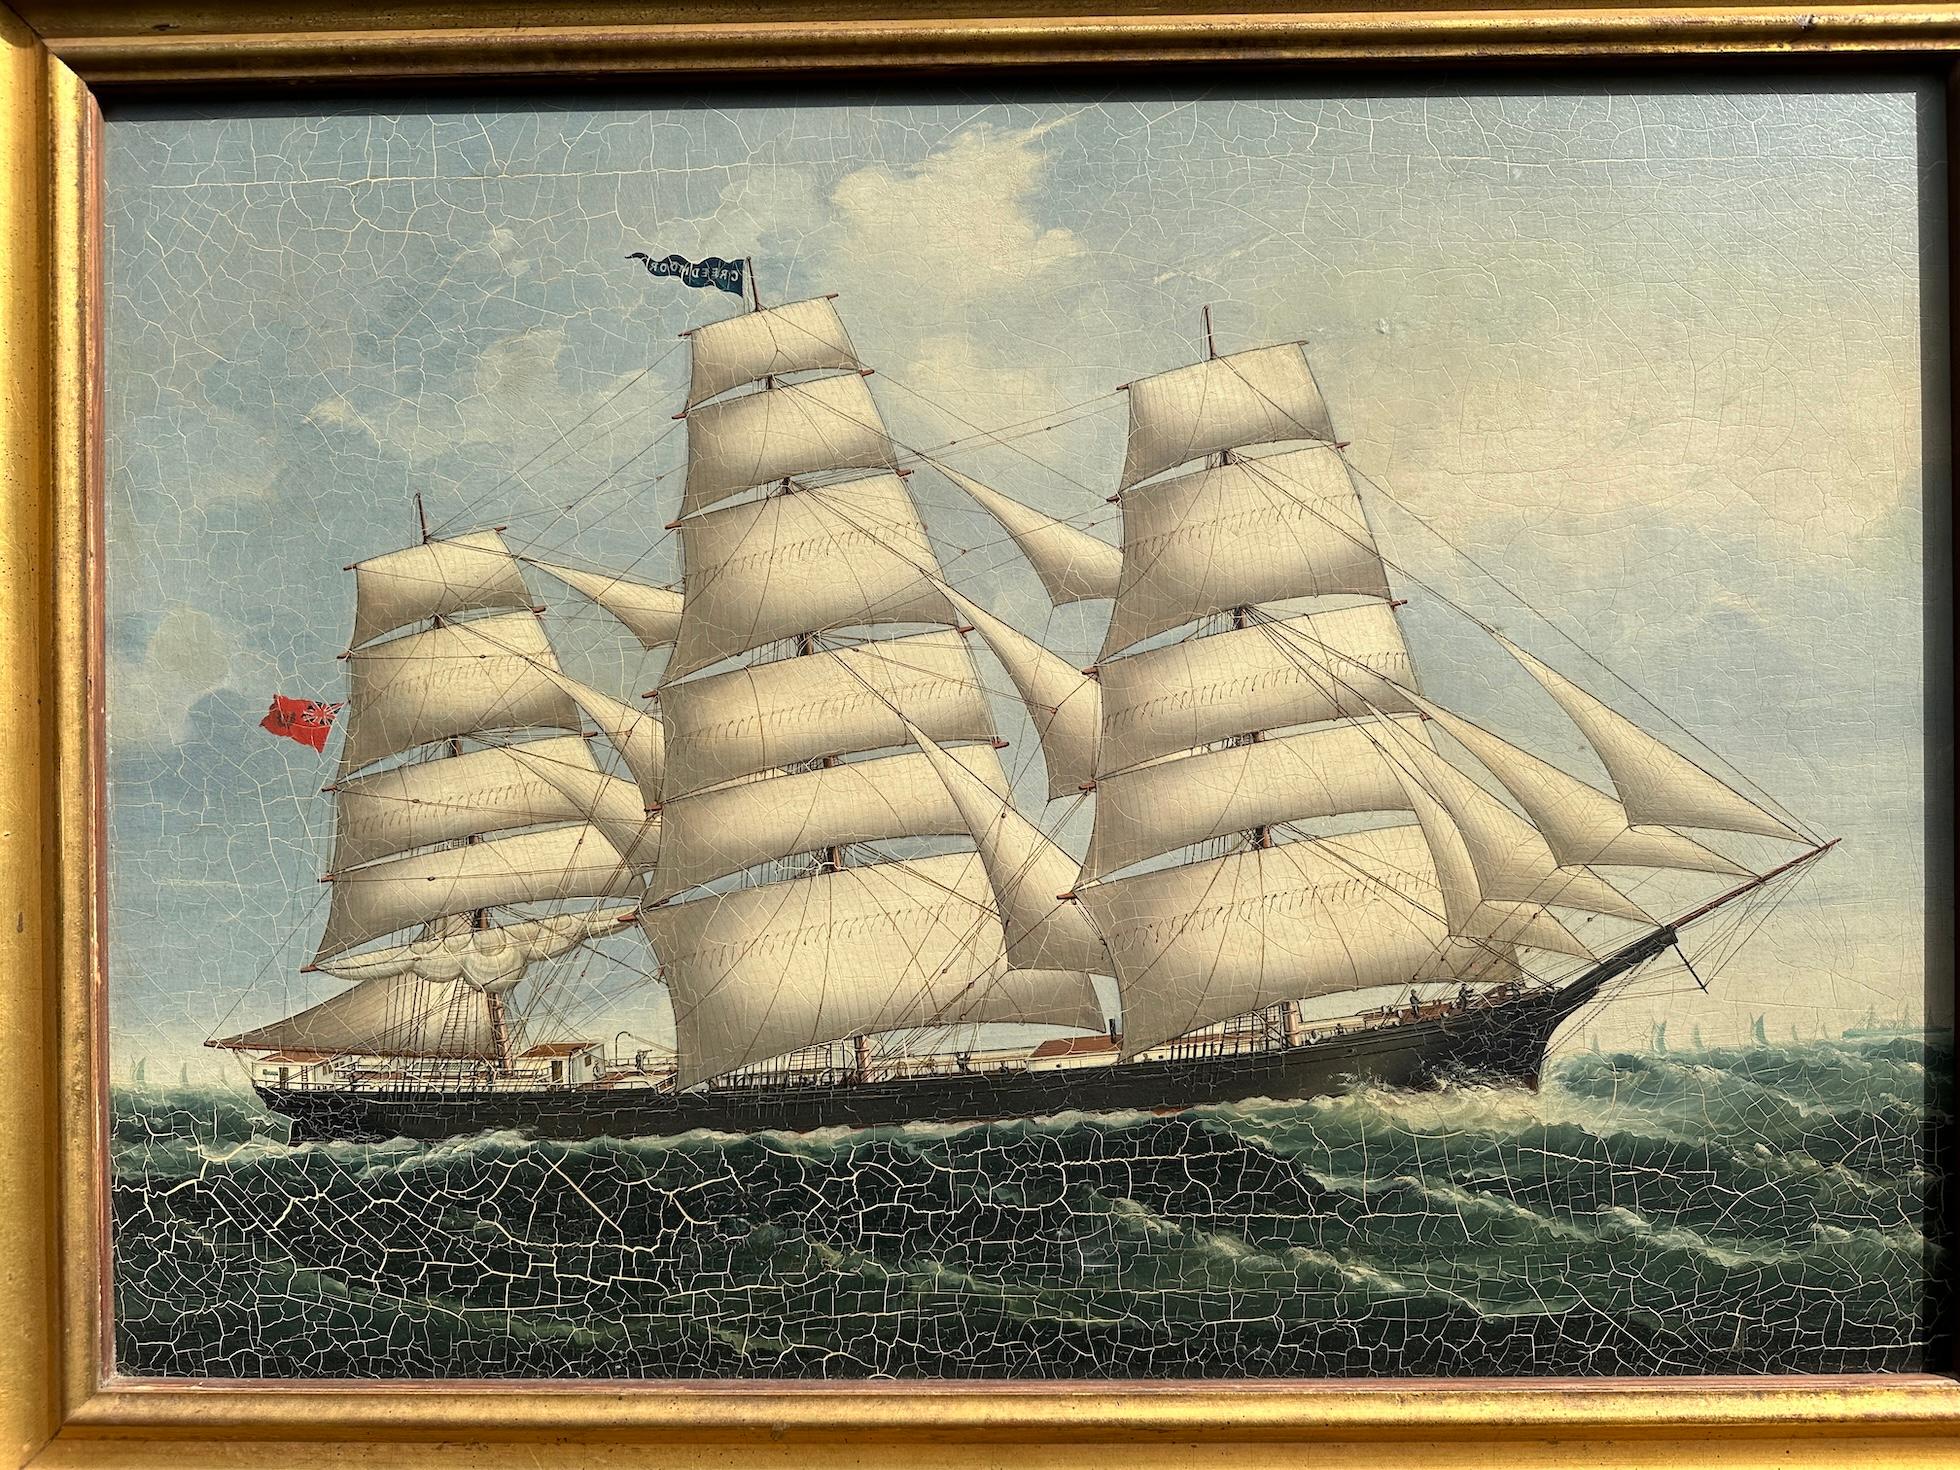 19th Century China Trade Tea Clipper in full sail at Sea, sailing - Painting by 19th century China Trade